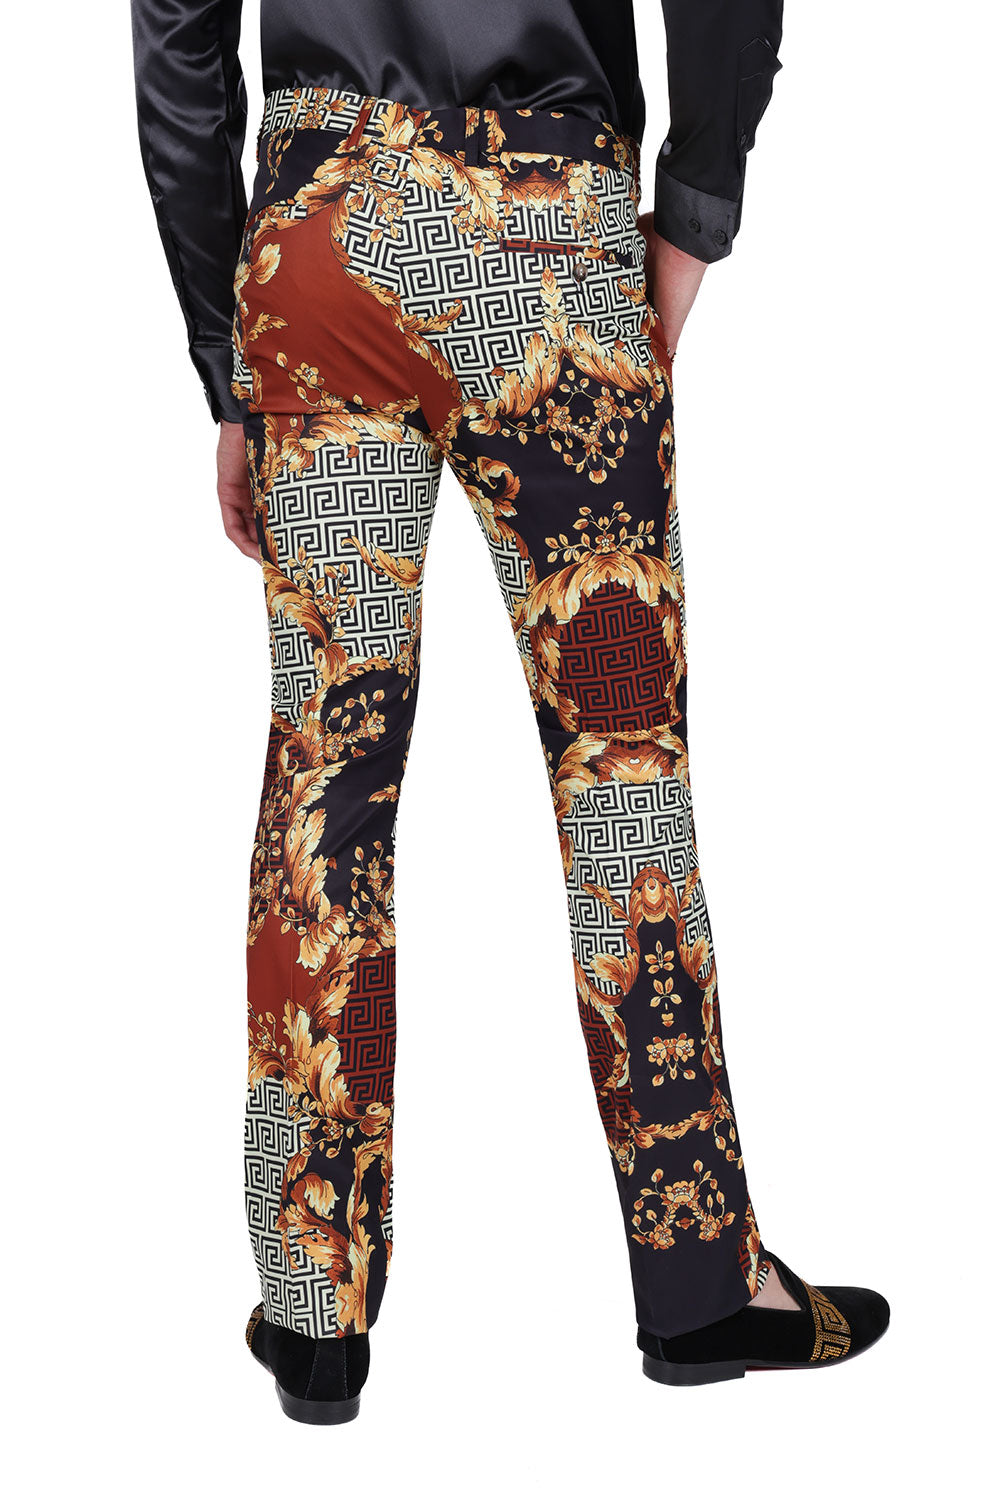 Barabas Men's Baroque Greek Print Floral Design Chino Pants CP169 Saddle